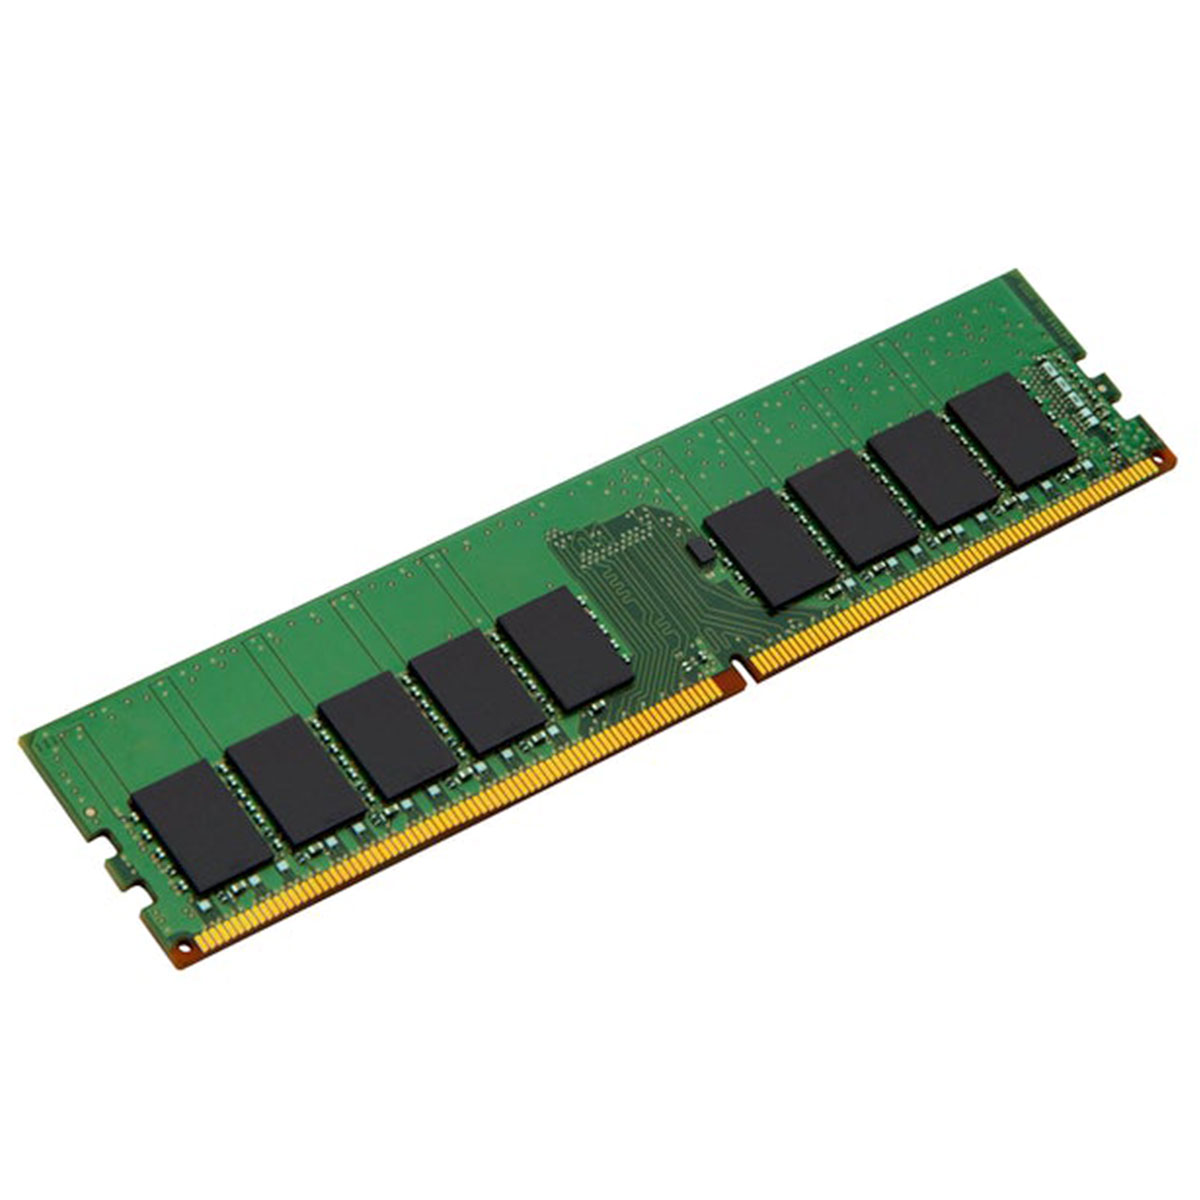 Memória Servidor 16GB DDR4 Kingston KSM32RS4/16HDR - PC4-3200 - ECC - CL22 - Registered com Paridade - 288-Pin RDIMM - 1Rx4 Hynix D